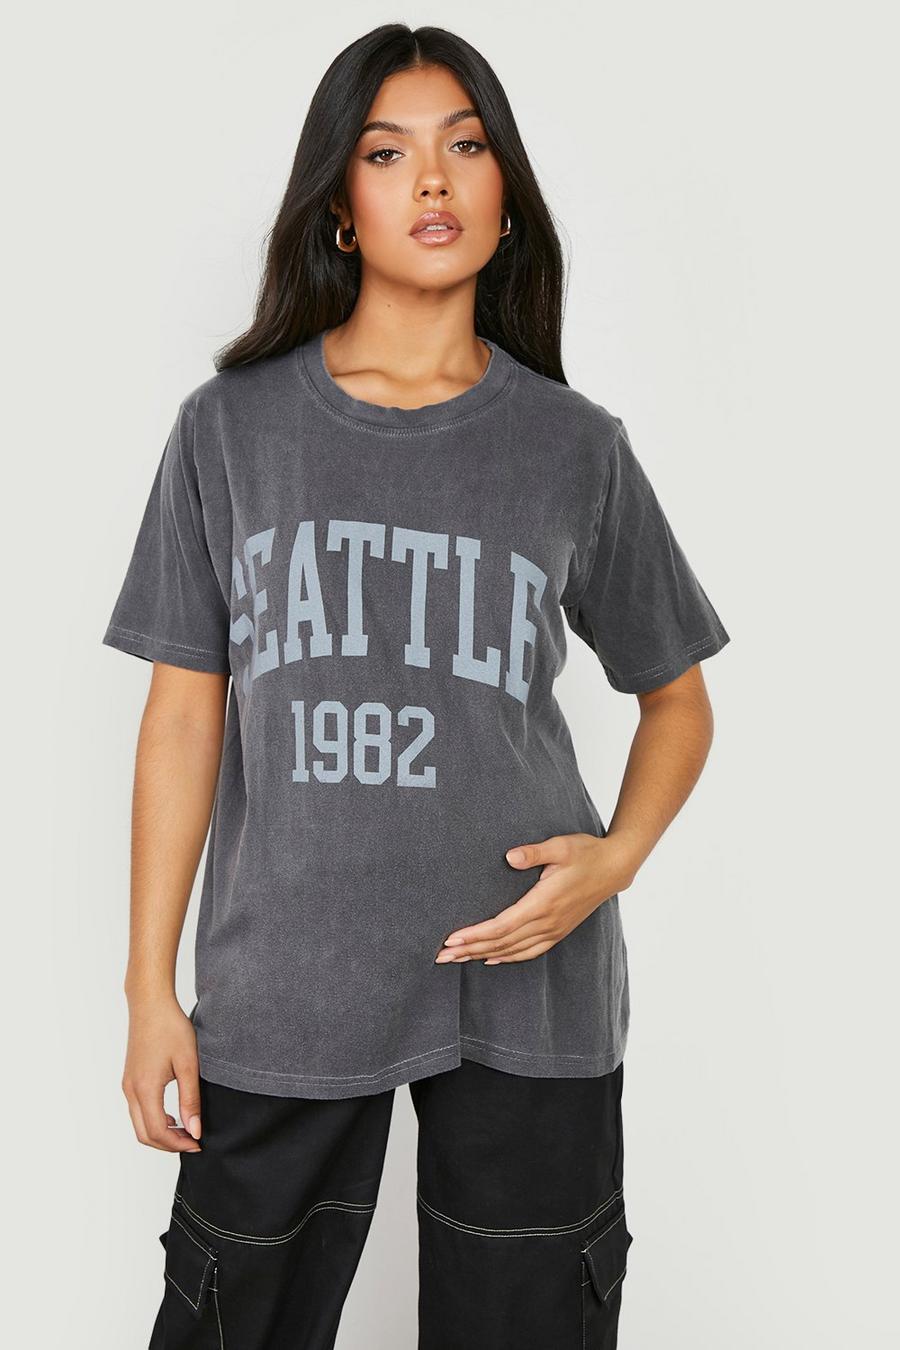 T-shirt Premaman oversize slavata Seattle, Charcoal gris